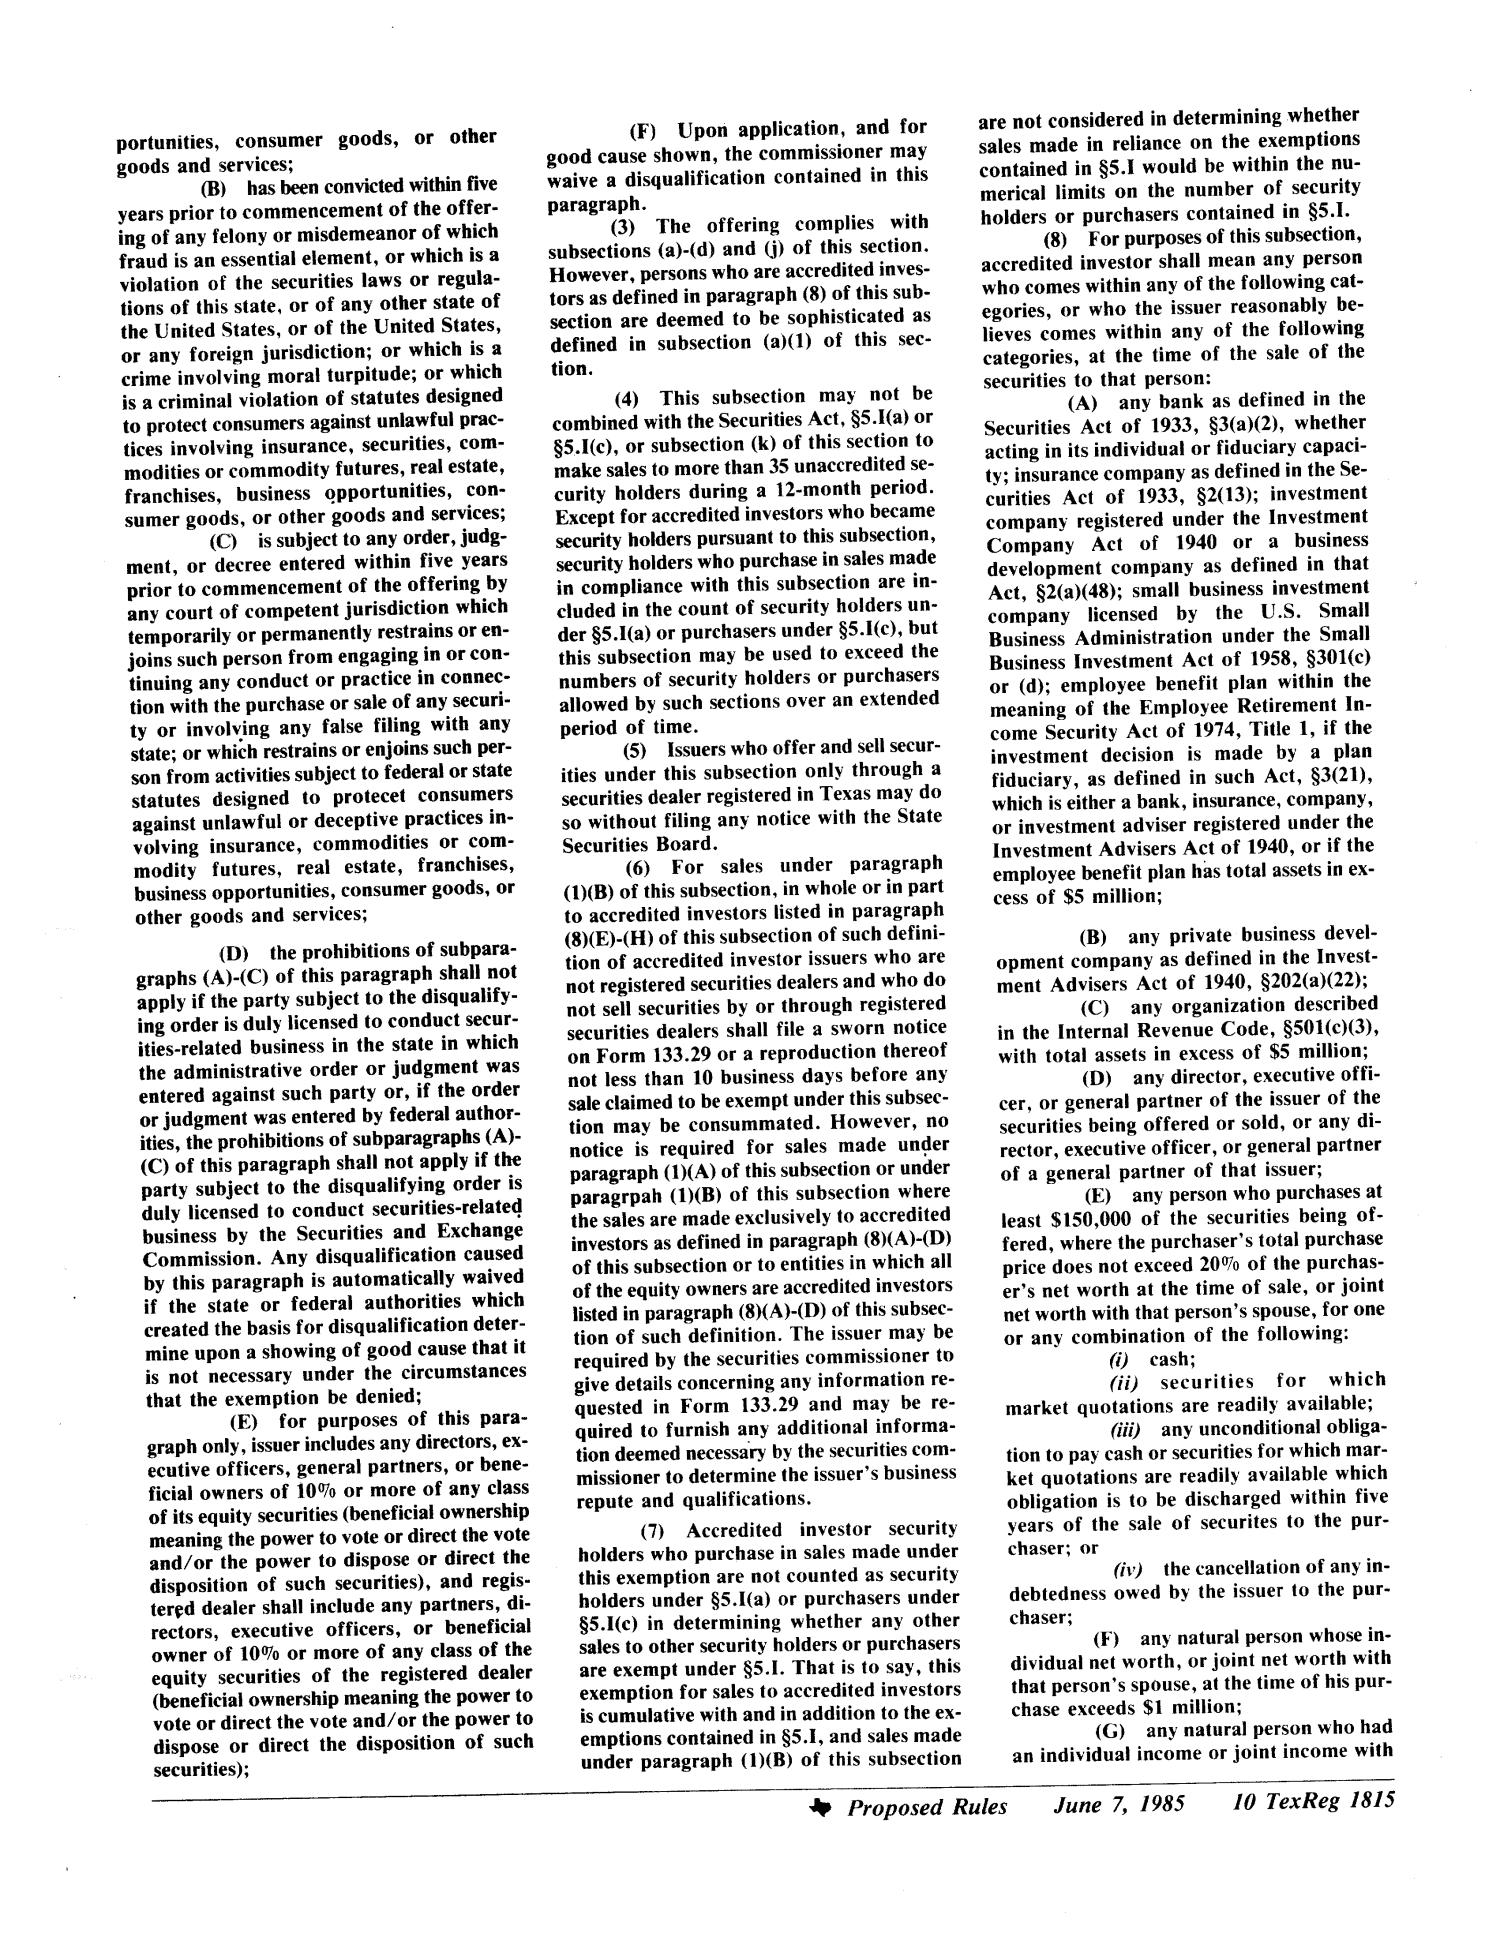 Texas Register, Volume 10, Number 44, Pages 1807-1878, June 7, 1985
                                                
                                                    1815
                                                